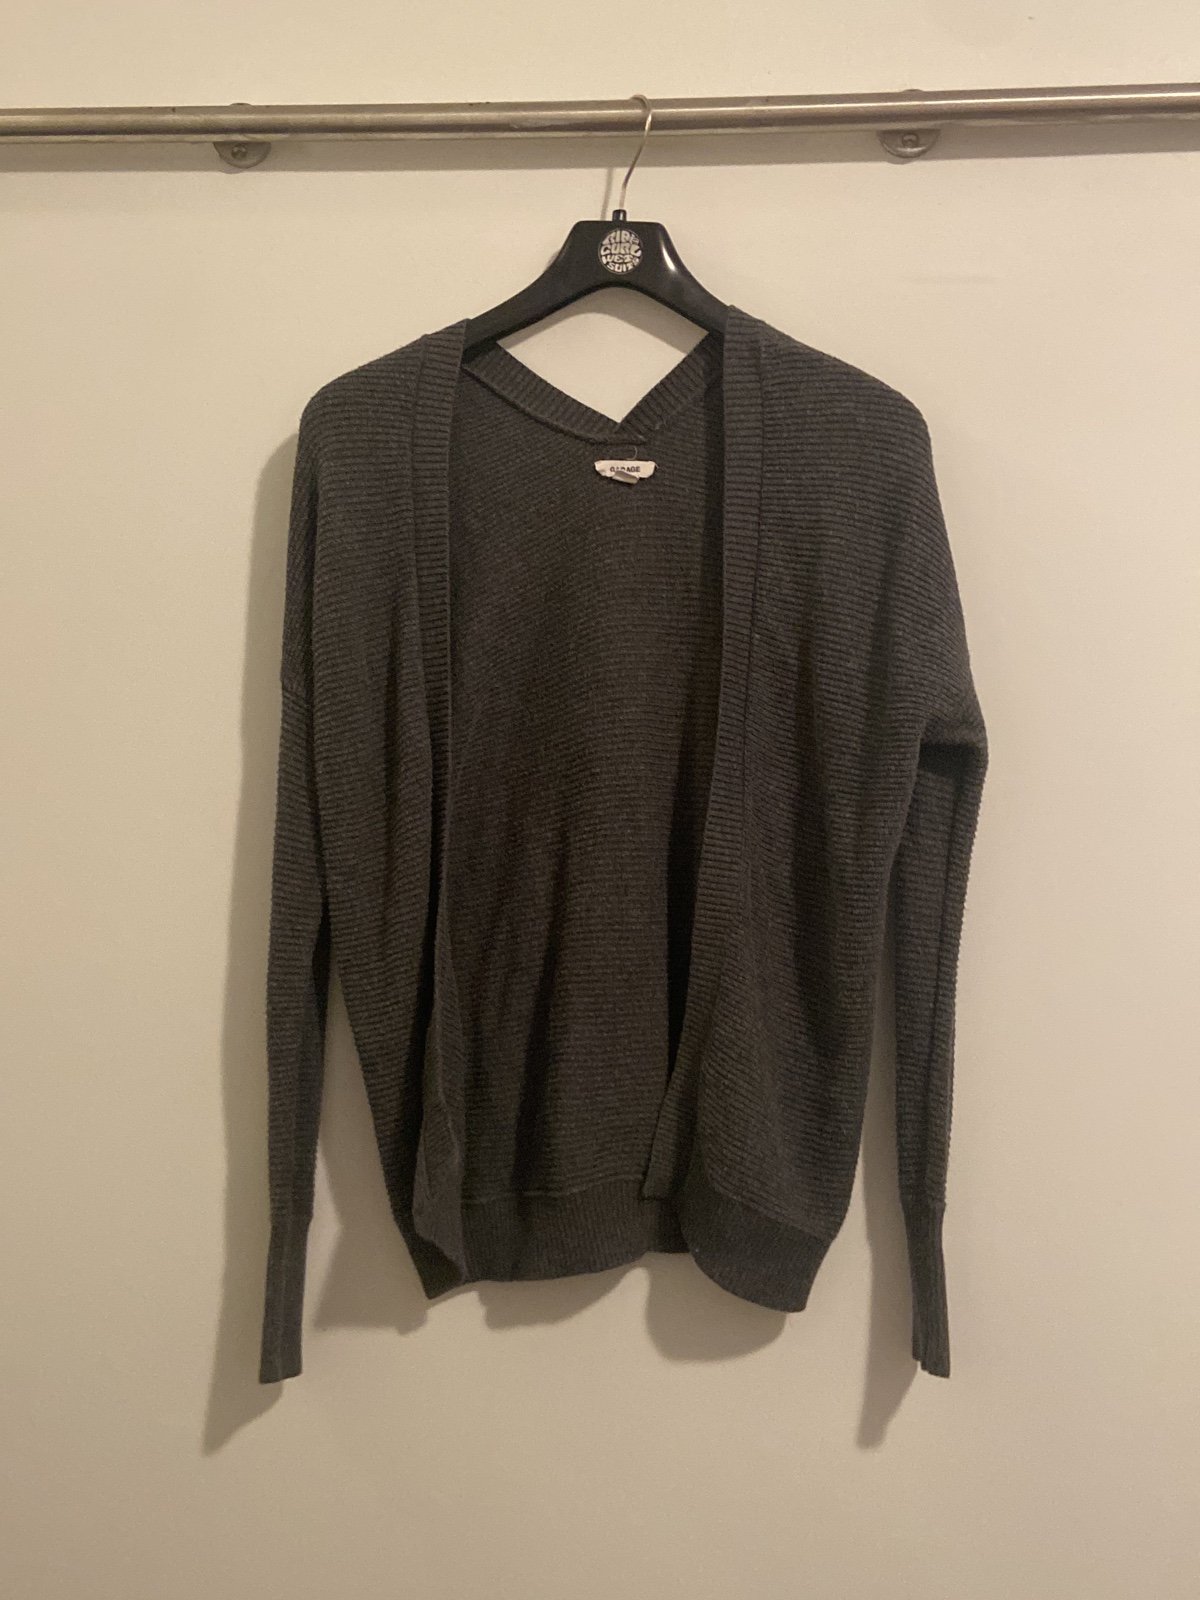 save up to 70% Garage cardigan sweater xs ioDzNzB8s New Style